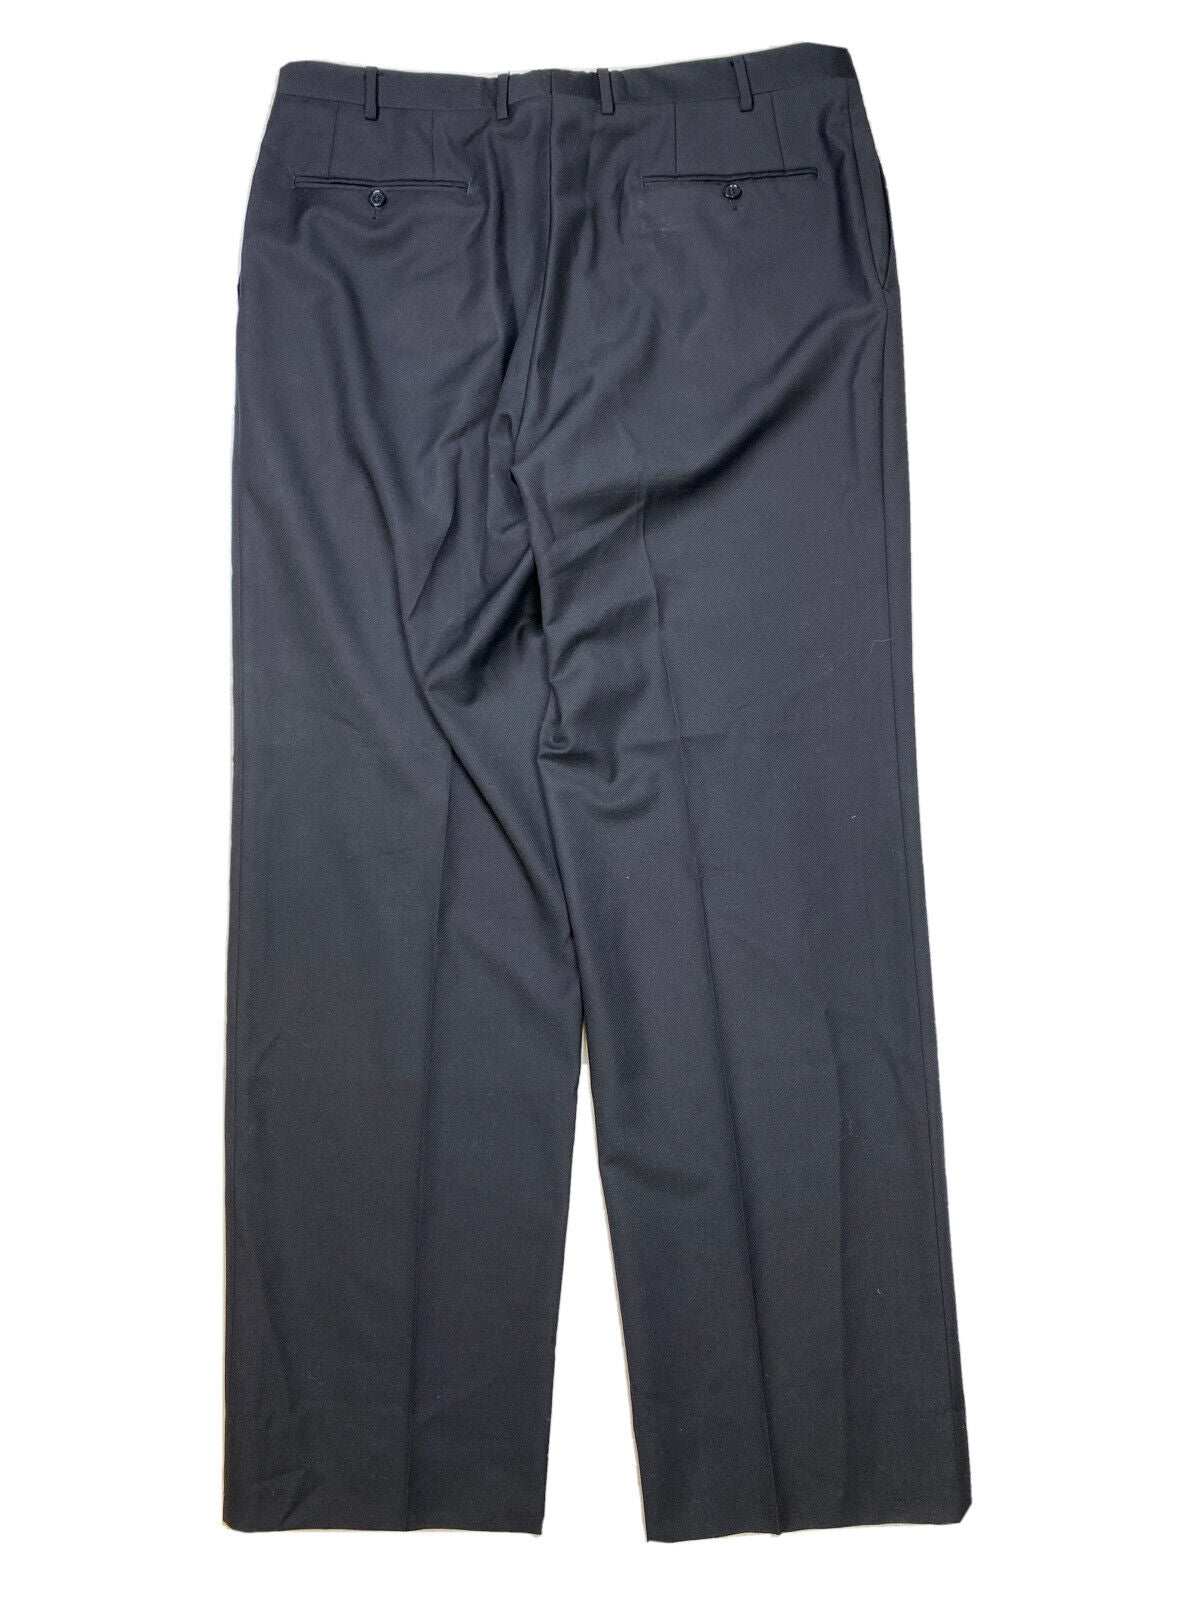 Canali Men's Black 100% Wool Flat Front Tessuto Dress Pants - 54/US 37